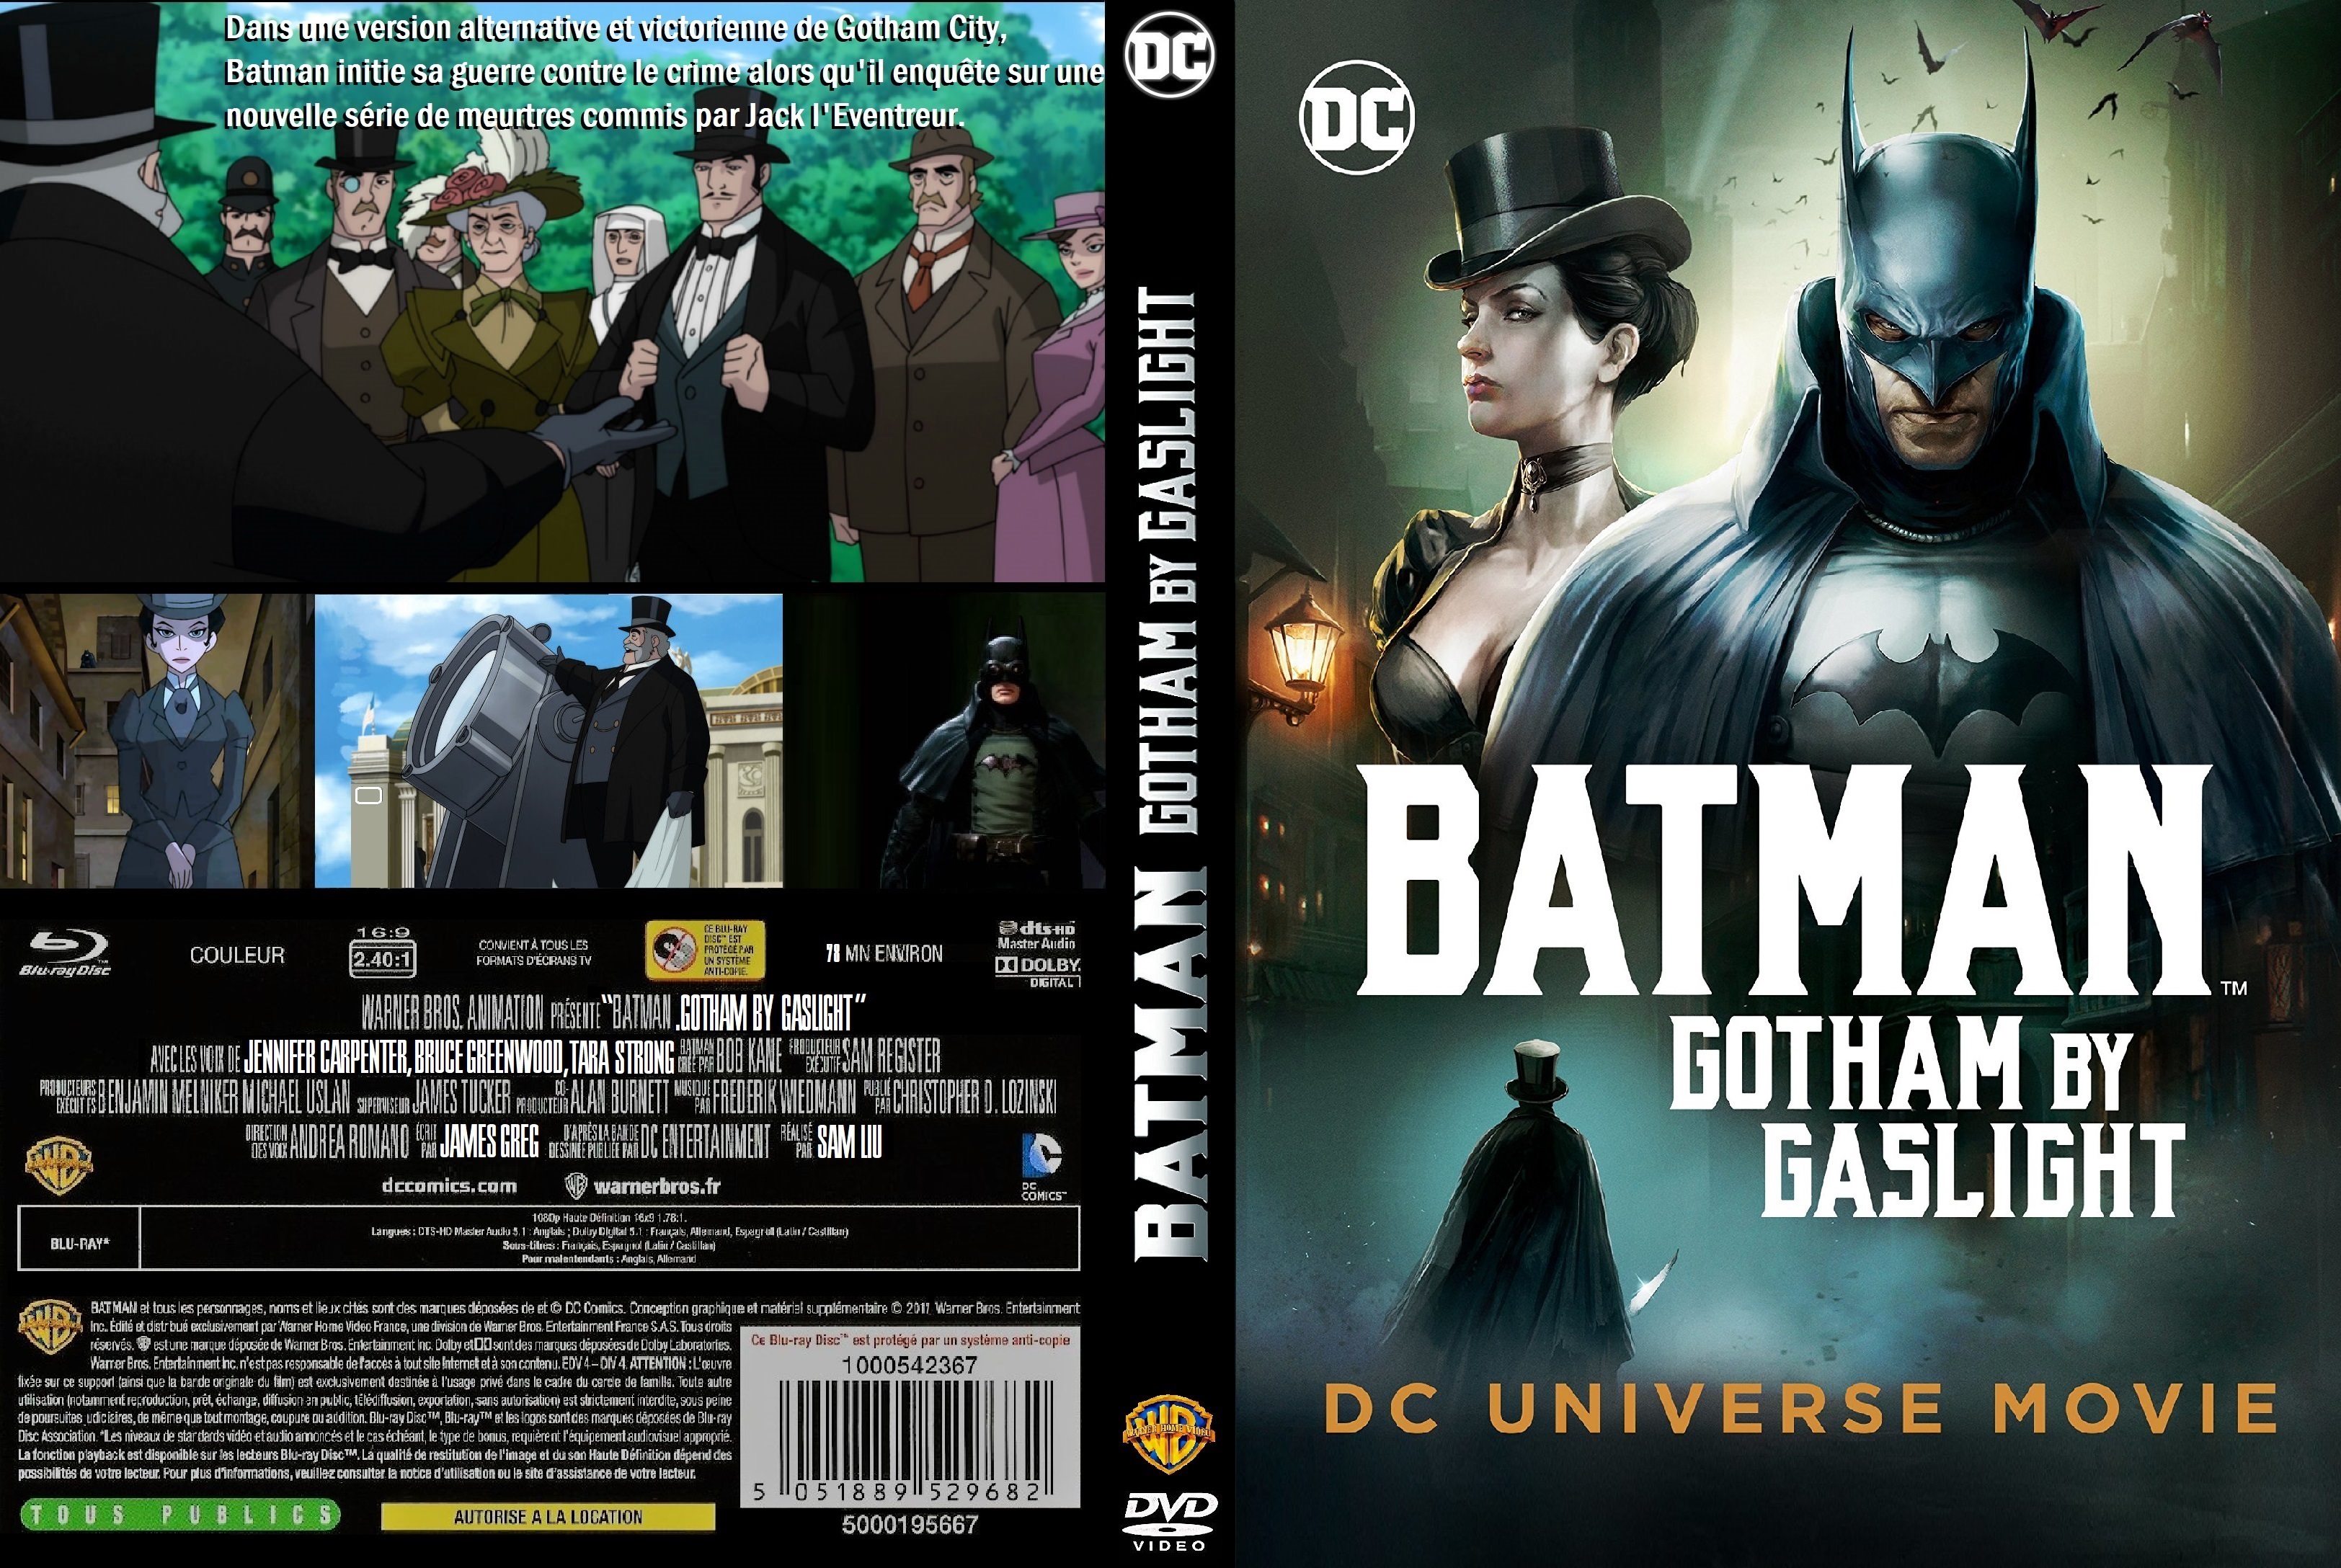 Jaquette DVD Batman-Gotham by gaslight custom